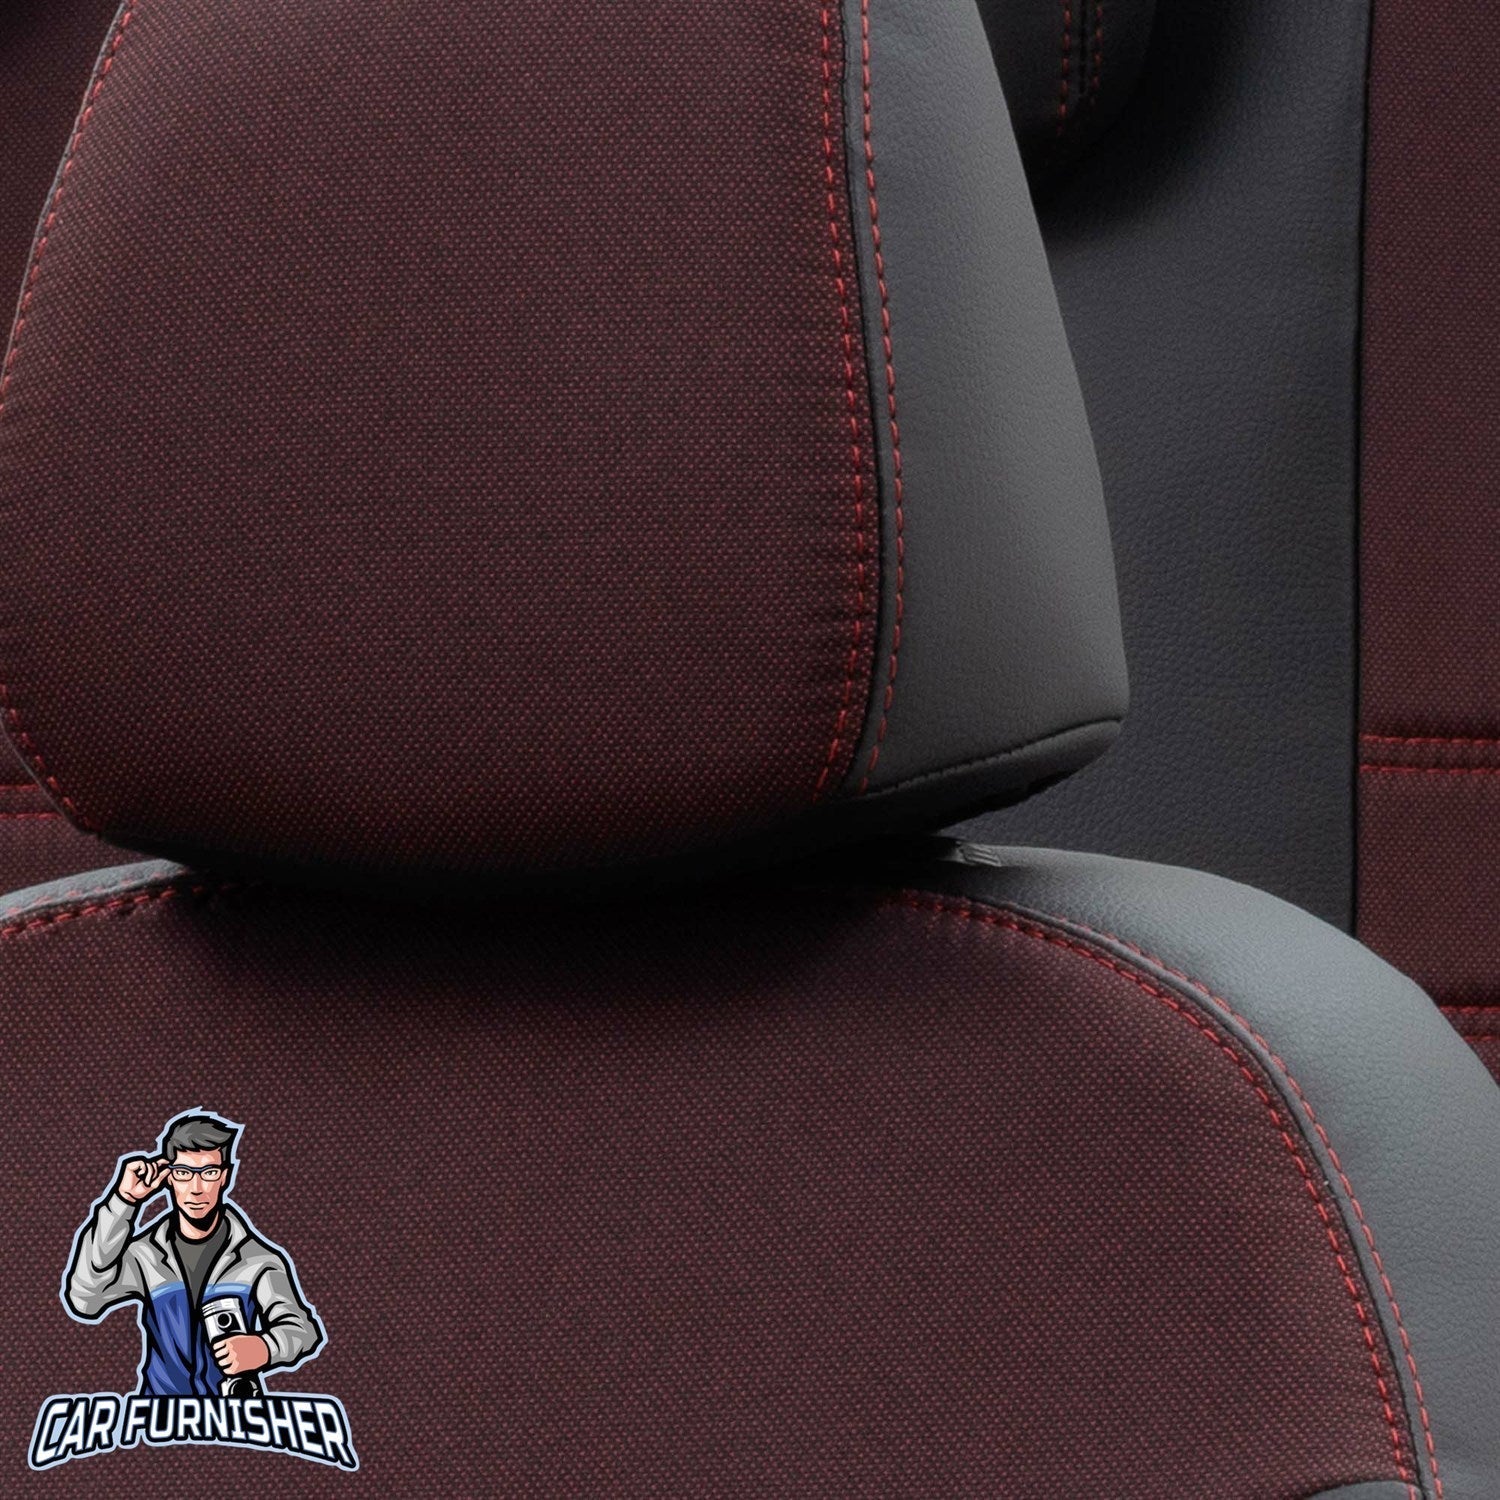 Seat Ibiza Seat Covers Paris Leather & Jacquard Design Red Leather & Jacquard Fabric